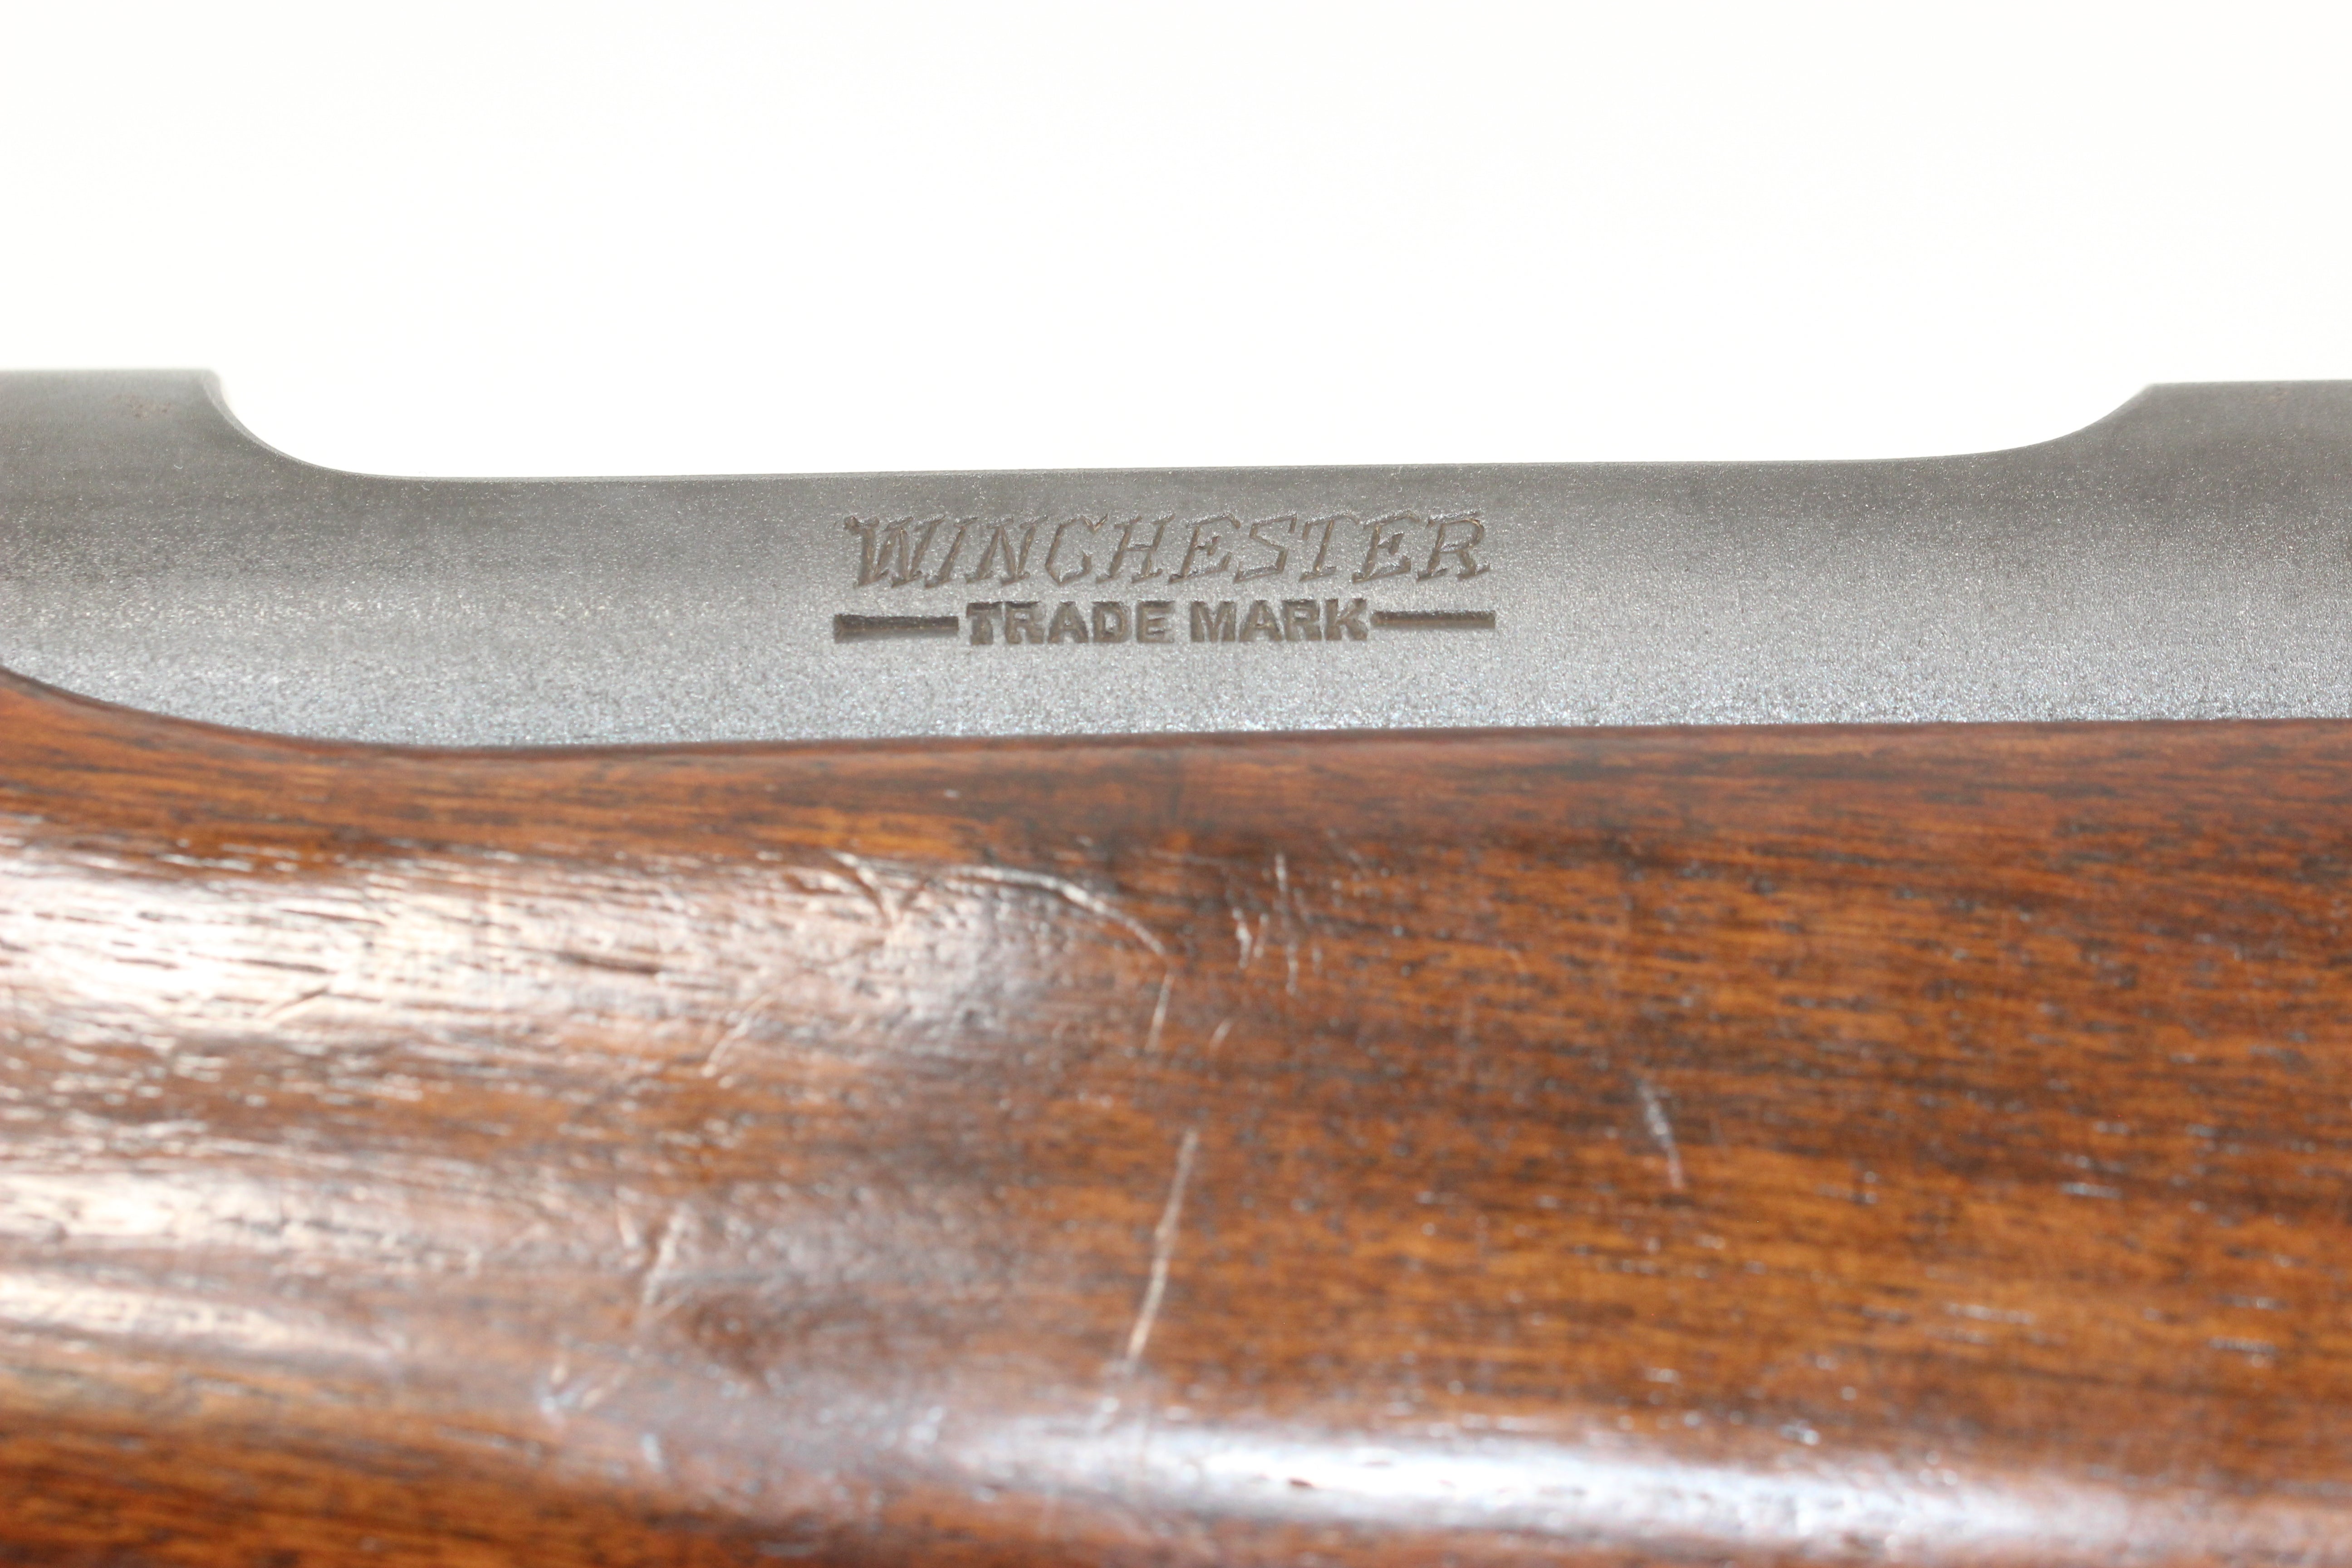 .270 Win. - Standard Rifle - 1949